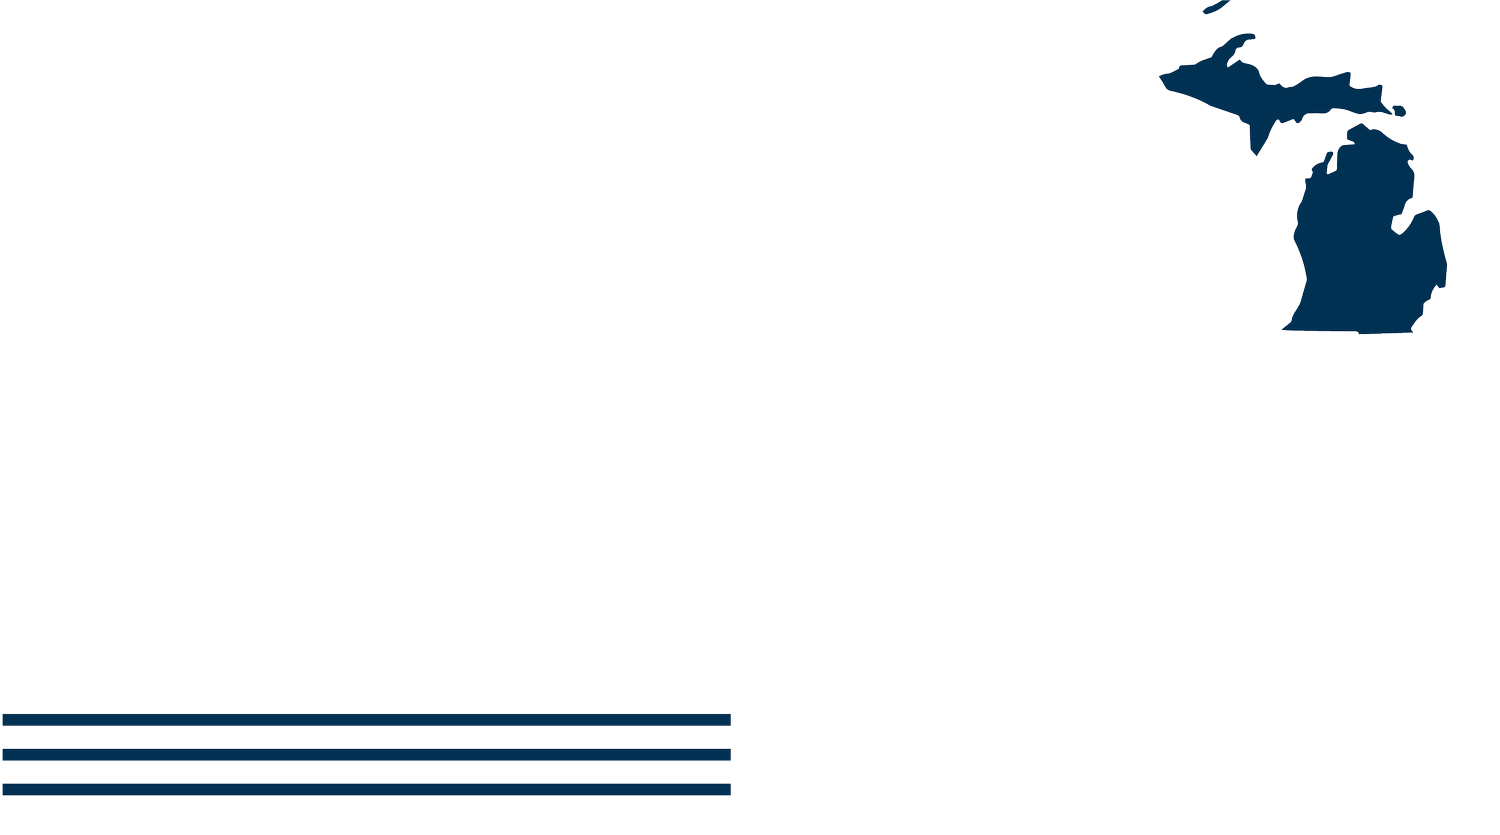 Justin Amash for Senate